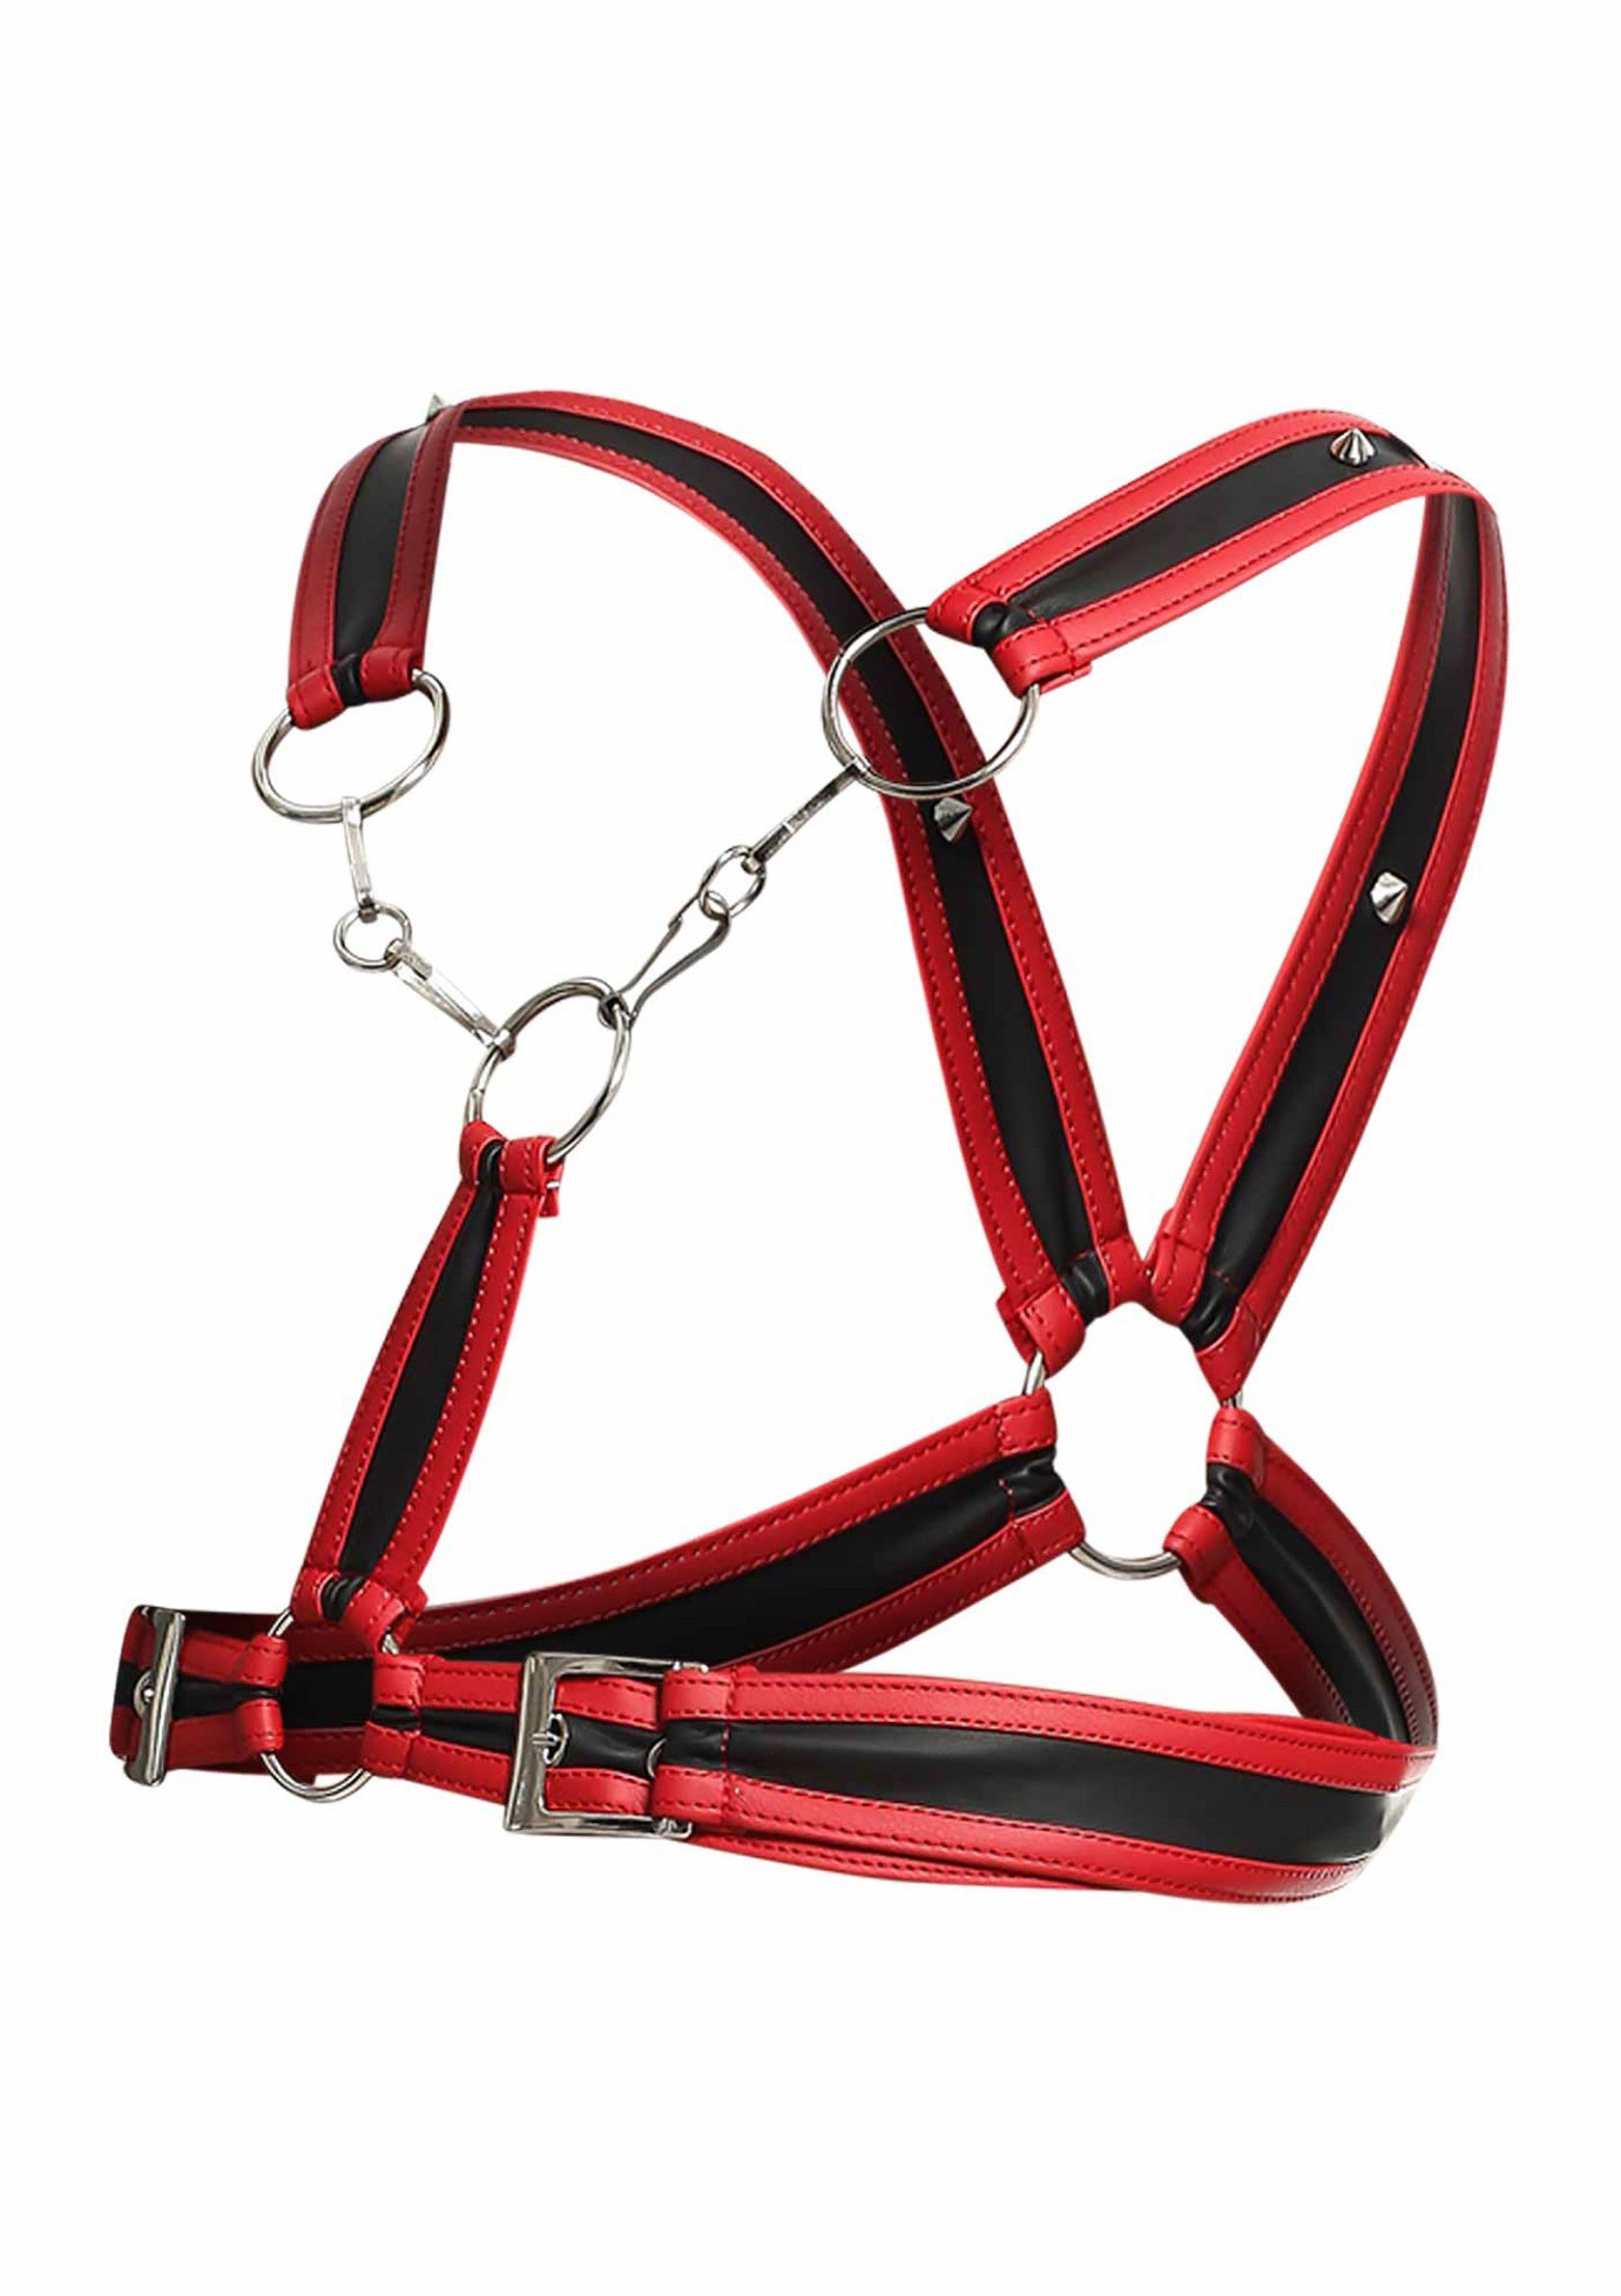 MOB Eroticwear Dngeon Cross Chain Harness RED O/S - 5